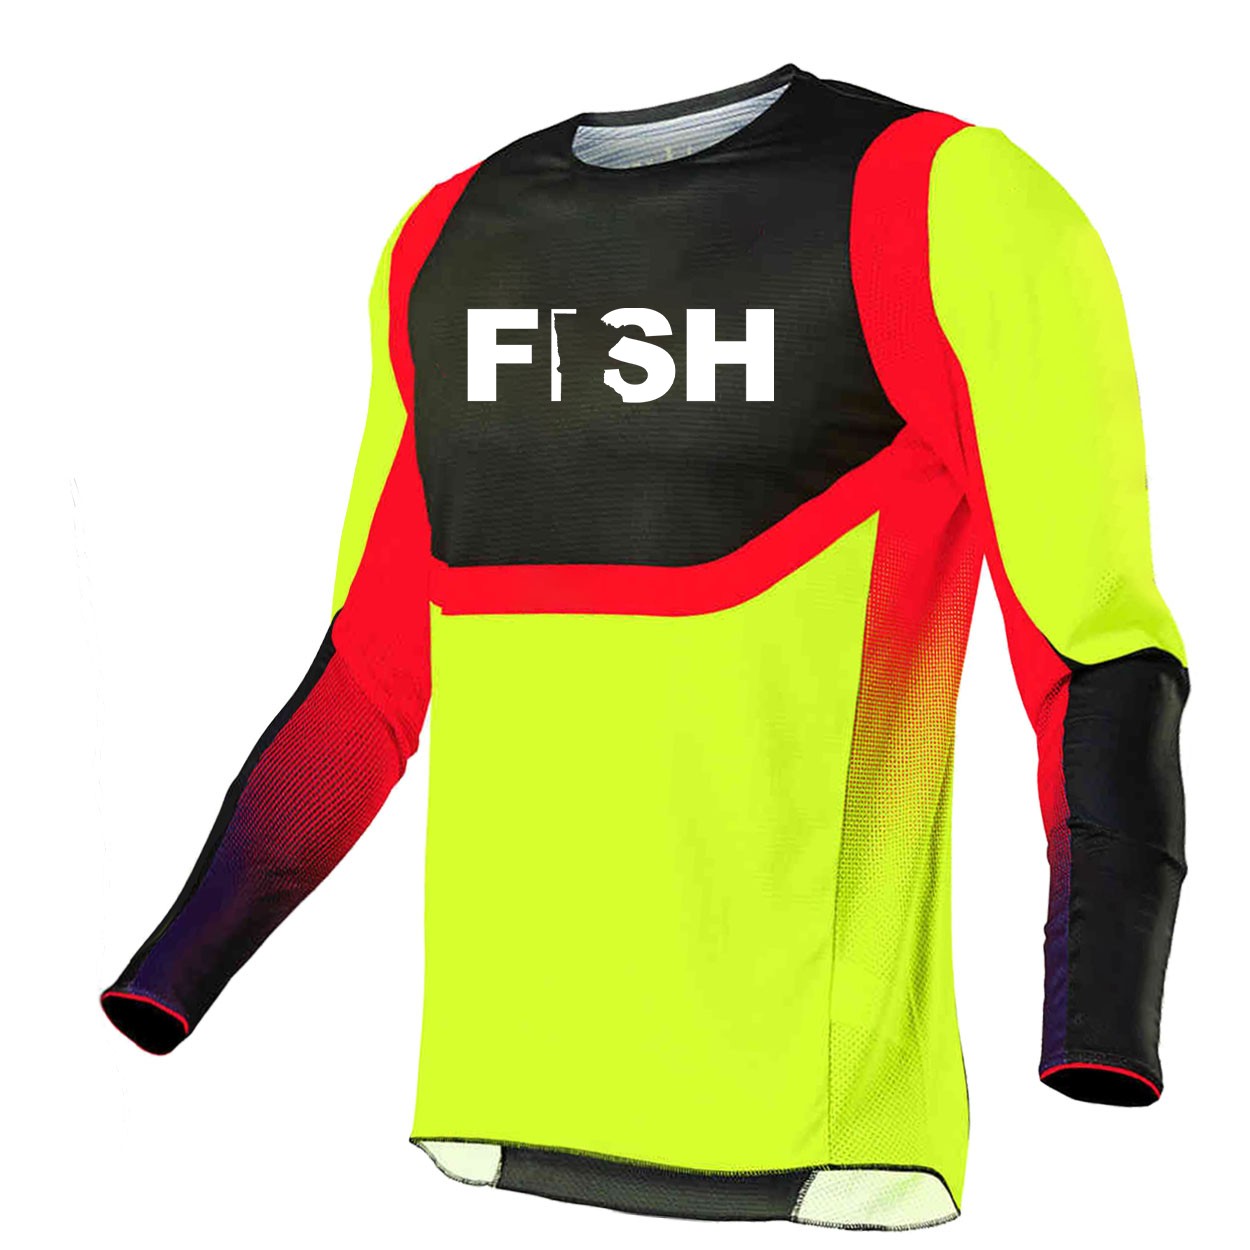 Fish Minnesota Classic Performance Jersey Long Sleeve Shirt Black/Yellow/Red